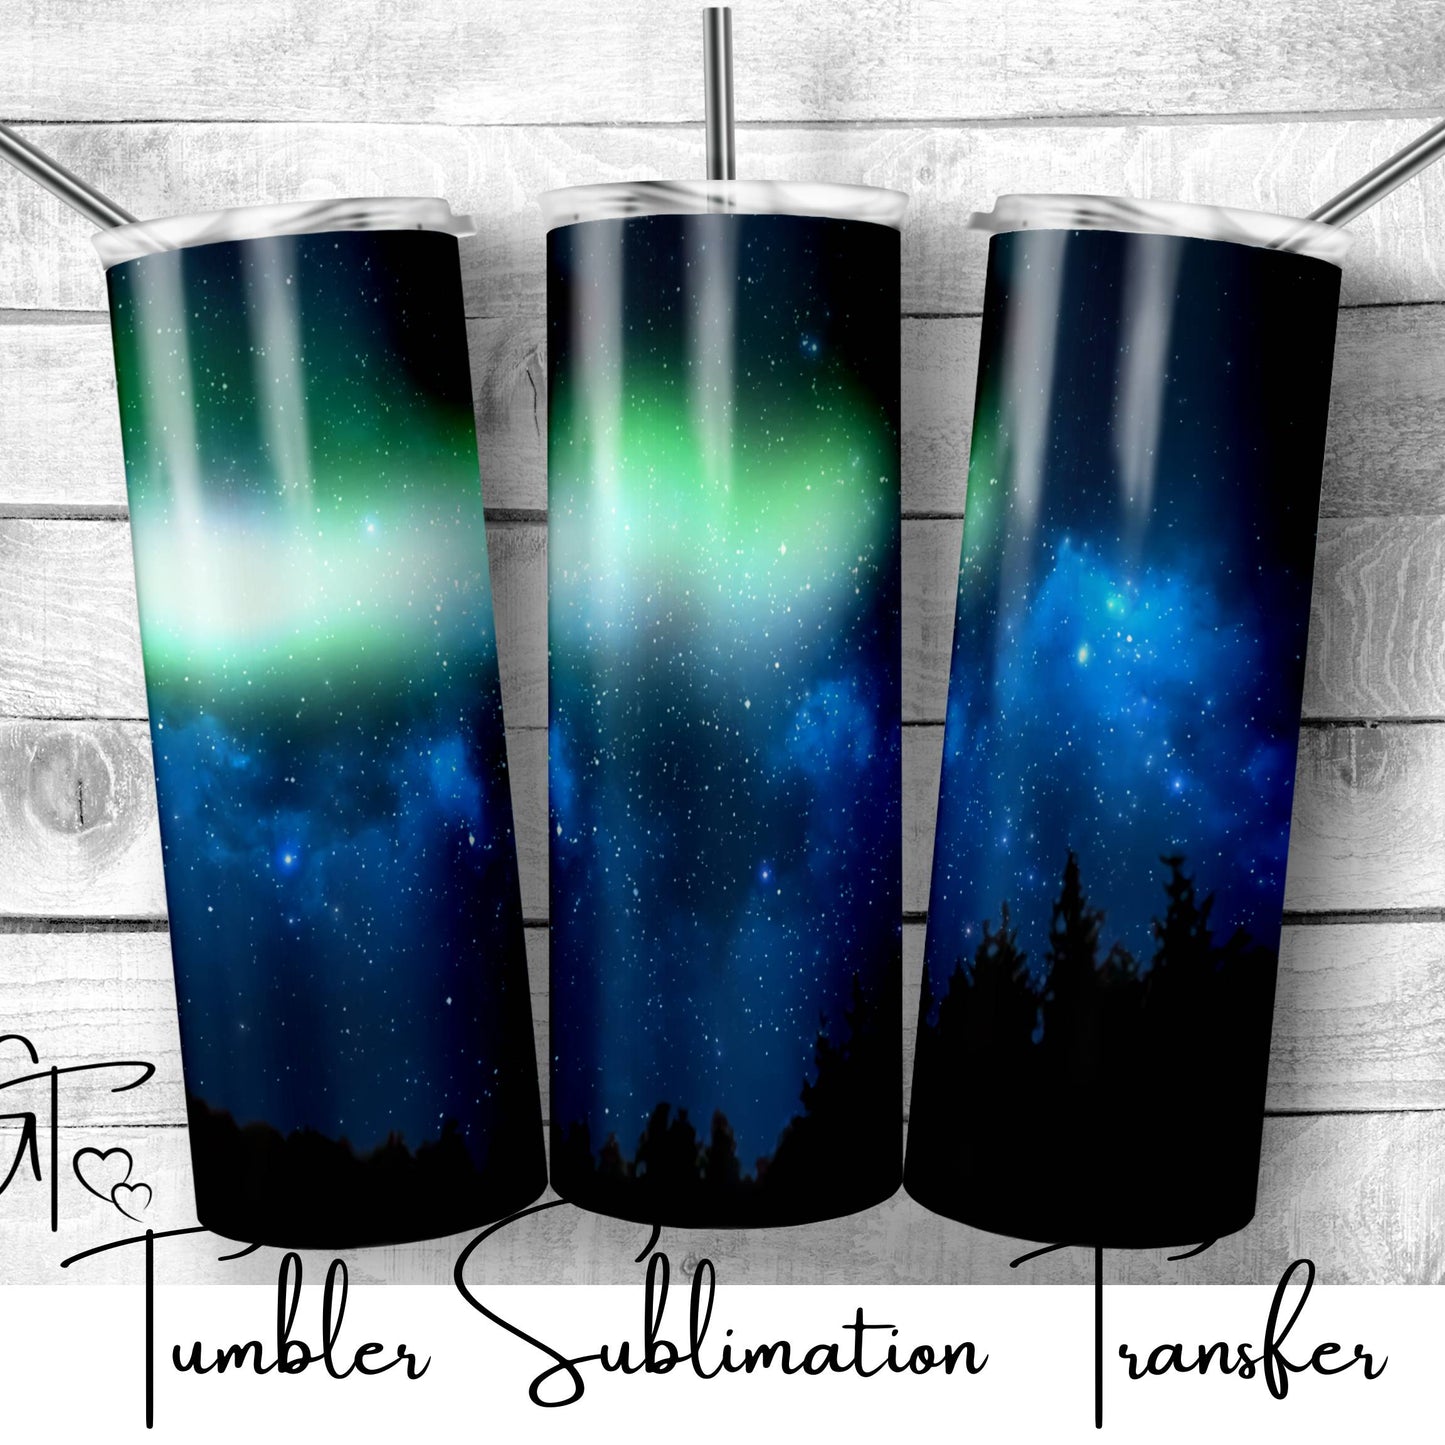 SUB460 Northern lights (aurora borealis) Camping Tumbler Sublimation Transfer